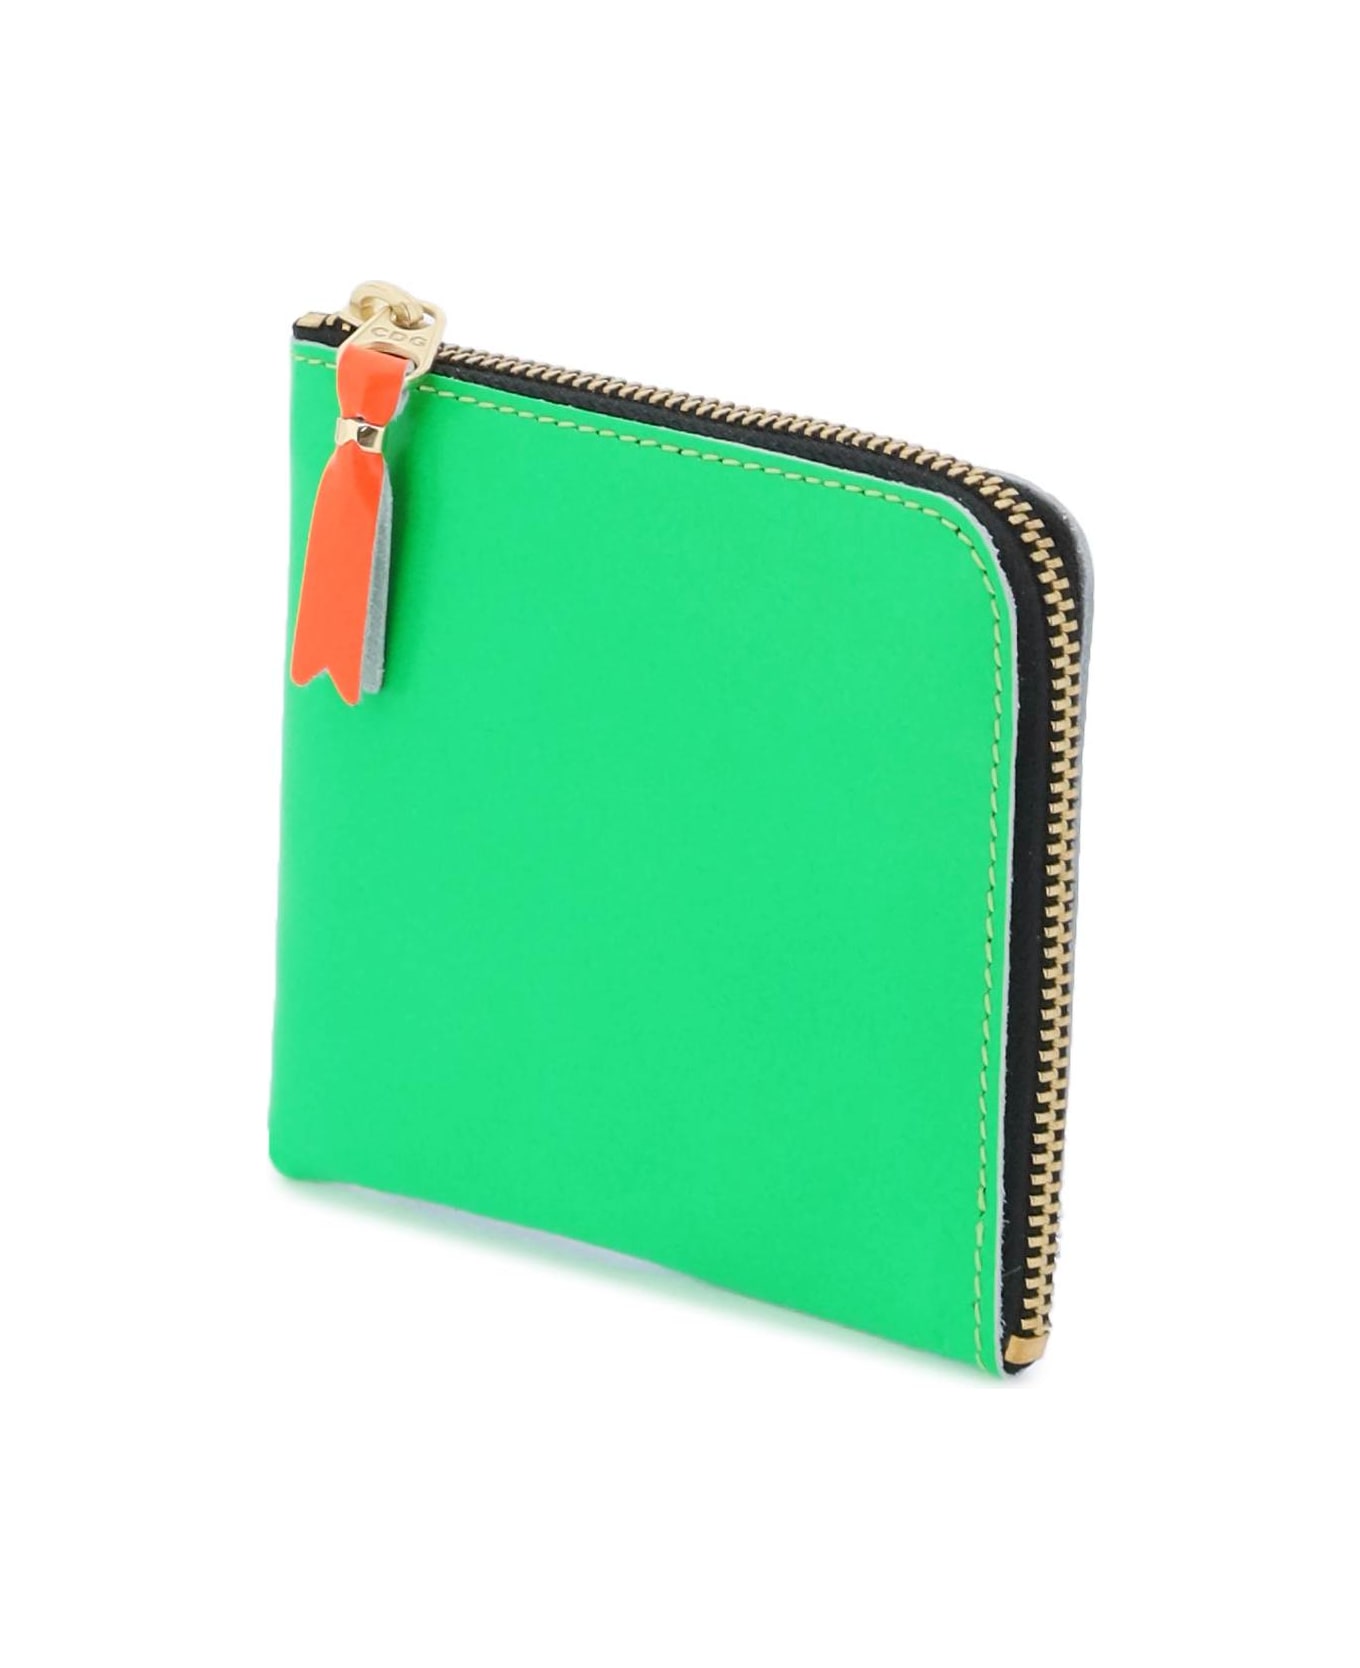 Comme des Garçons Wallet Super Fluo Flat Wallet - BLUE GREEN (Orange) 財布